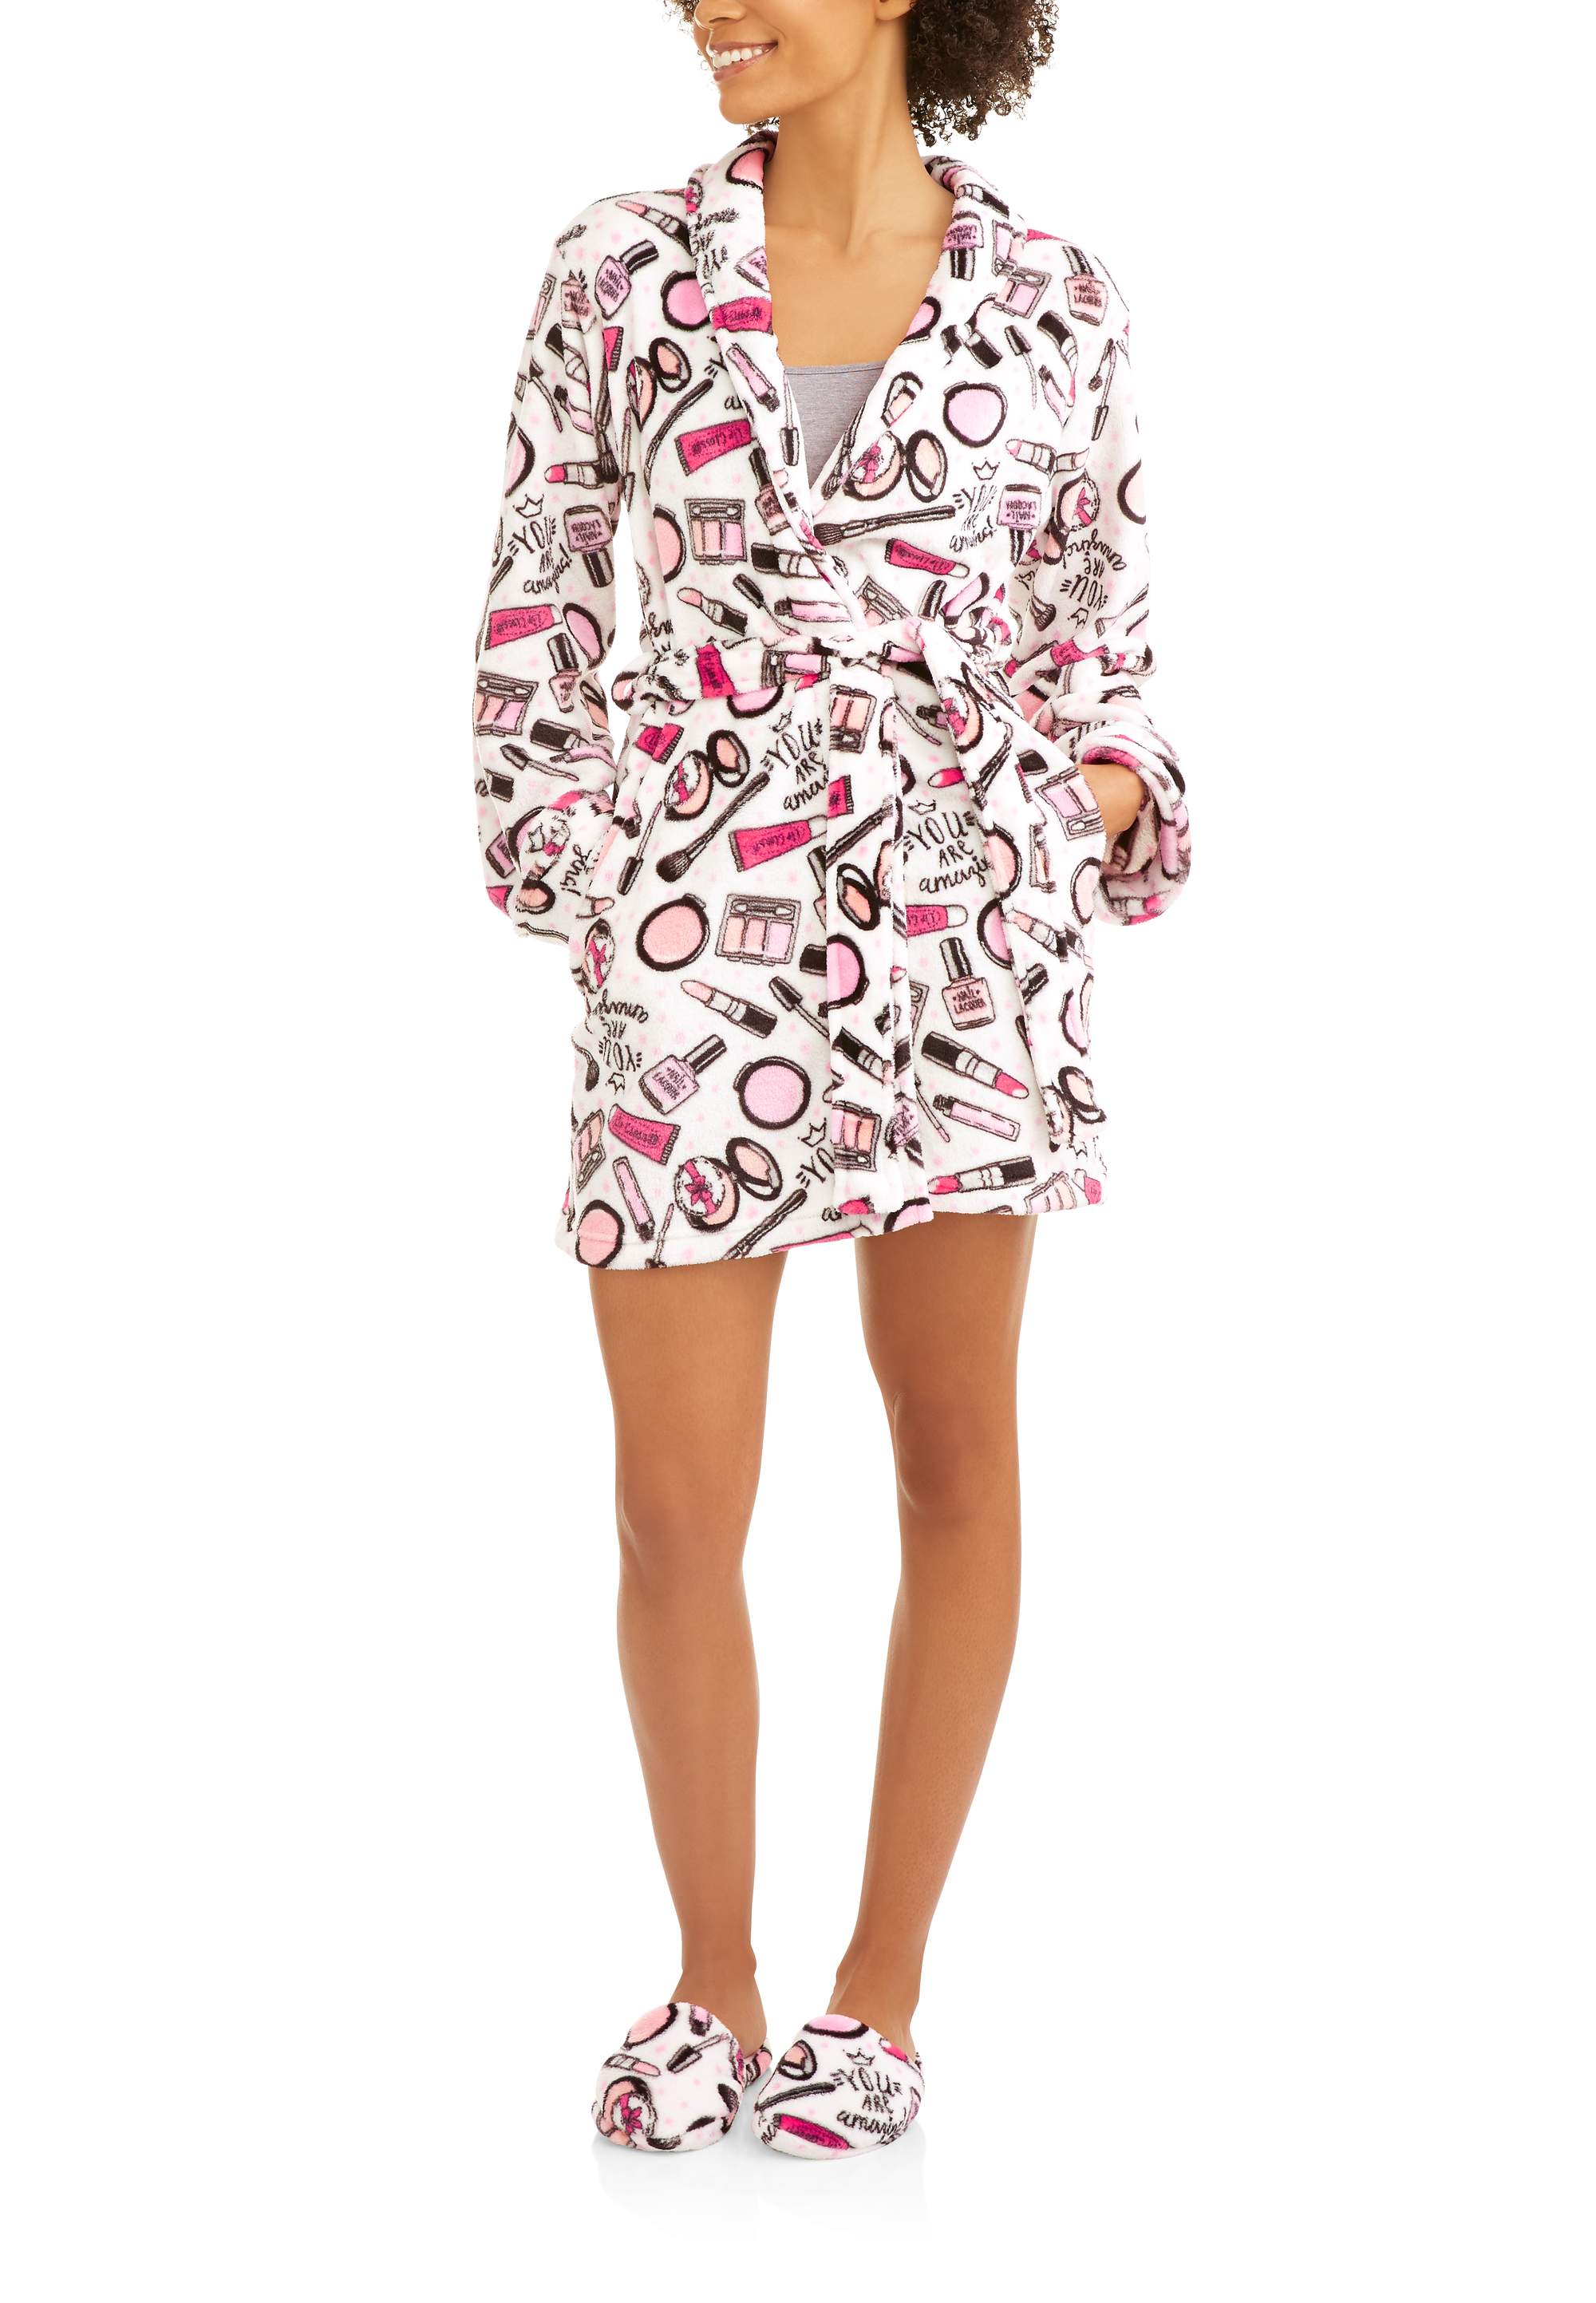 Luxe Plush Sleepwear Robe & Slipper Sets - image 1 of 2